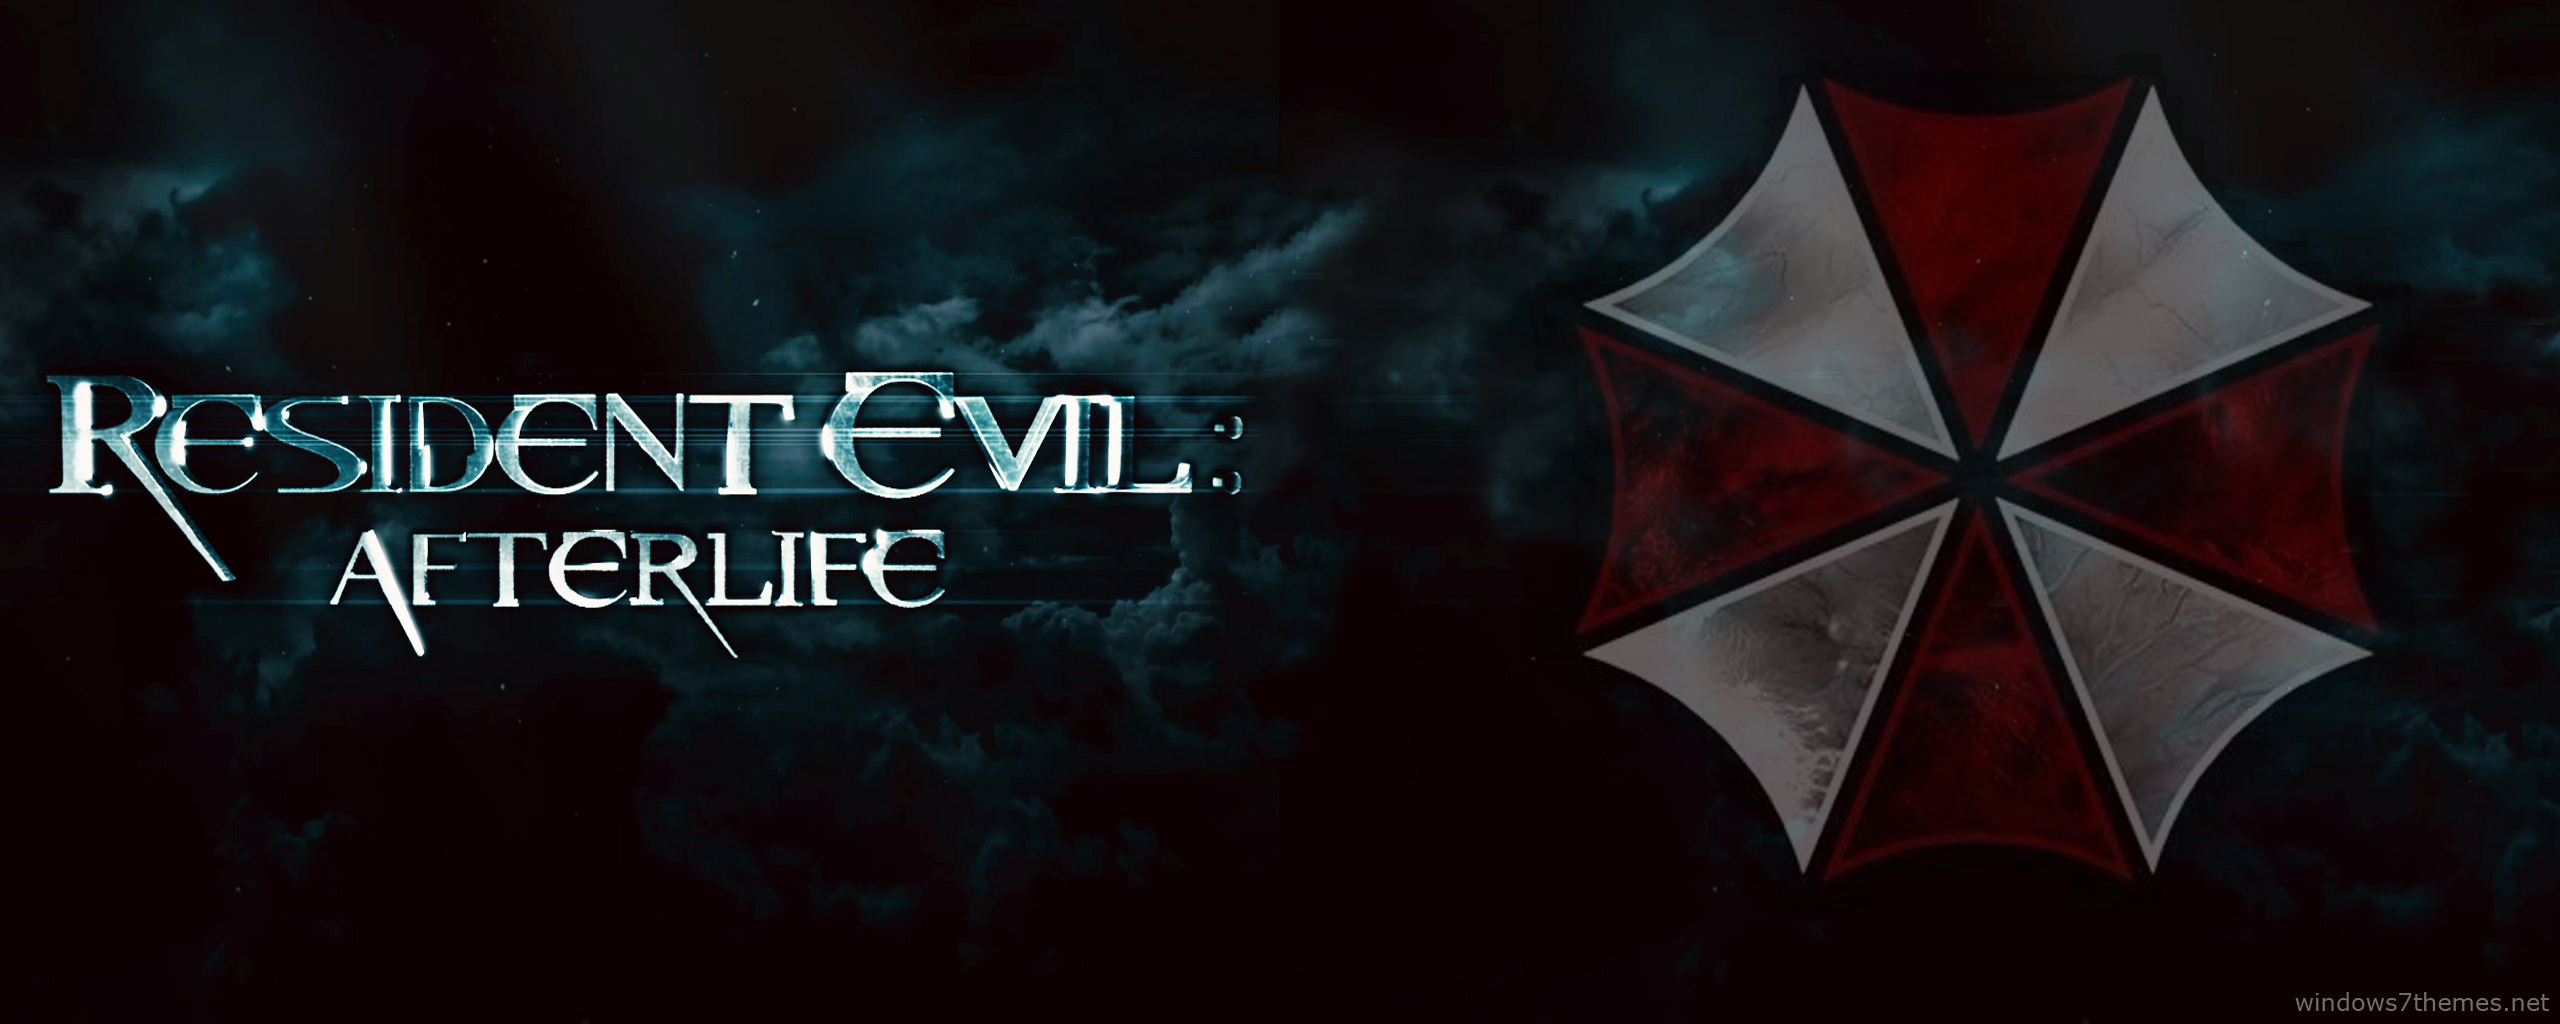 Resident Evil Afterlife Dual Monitor Wallpaper Version